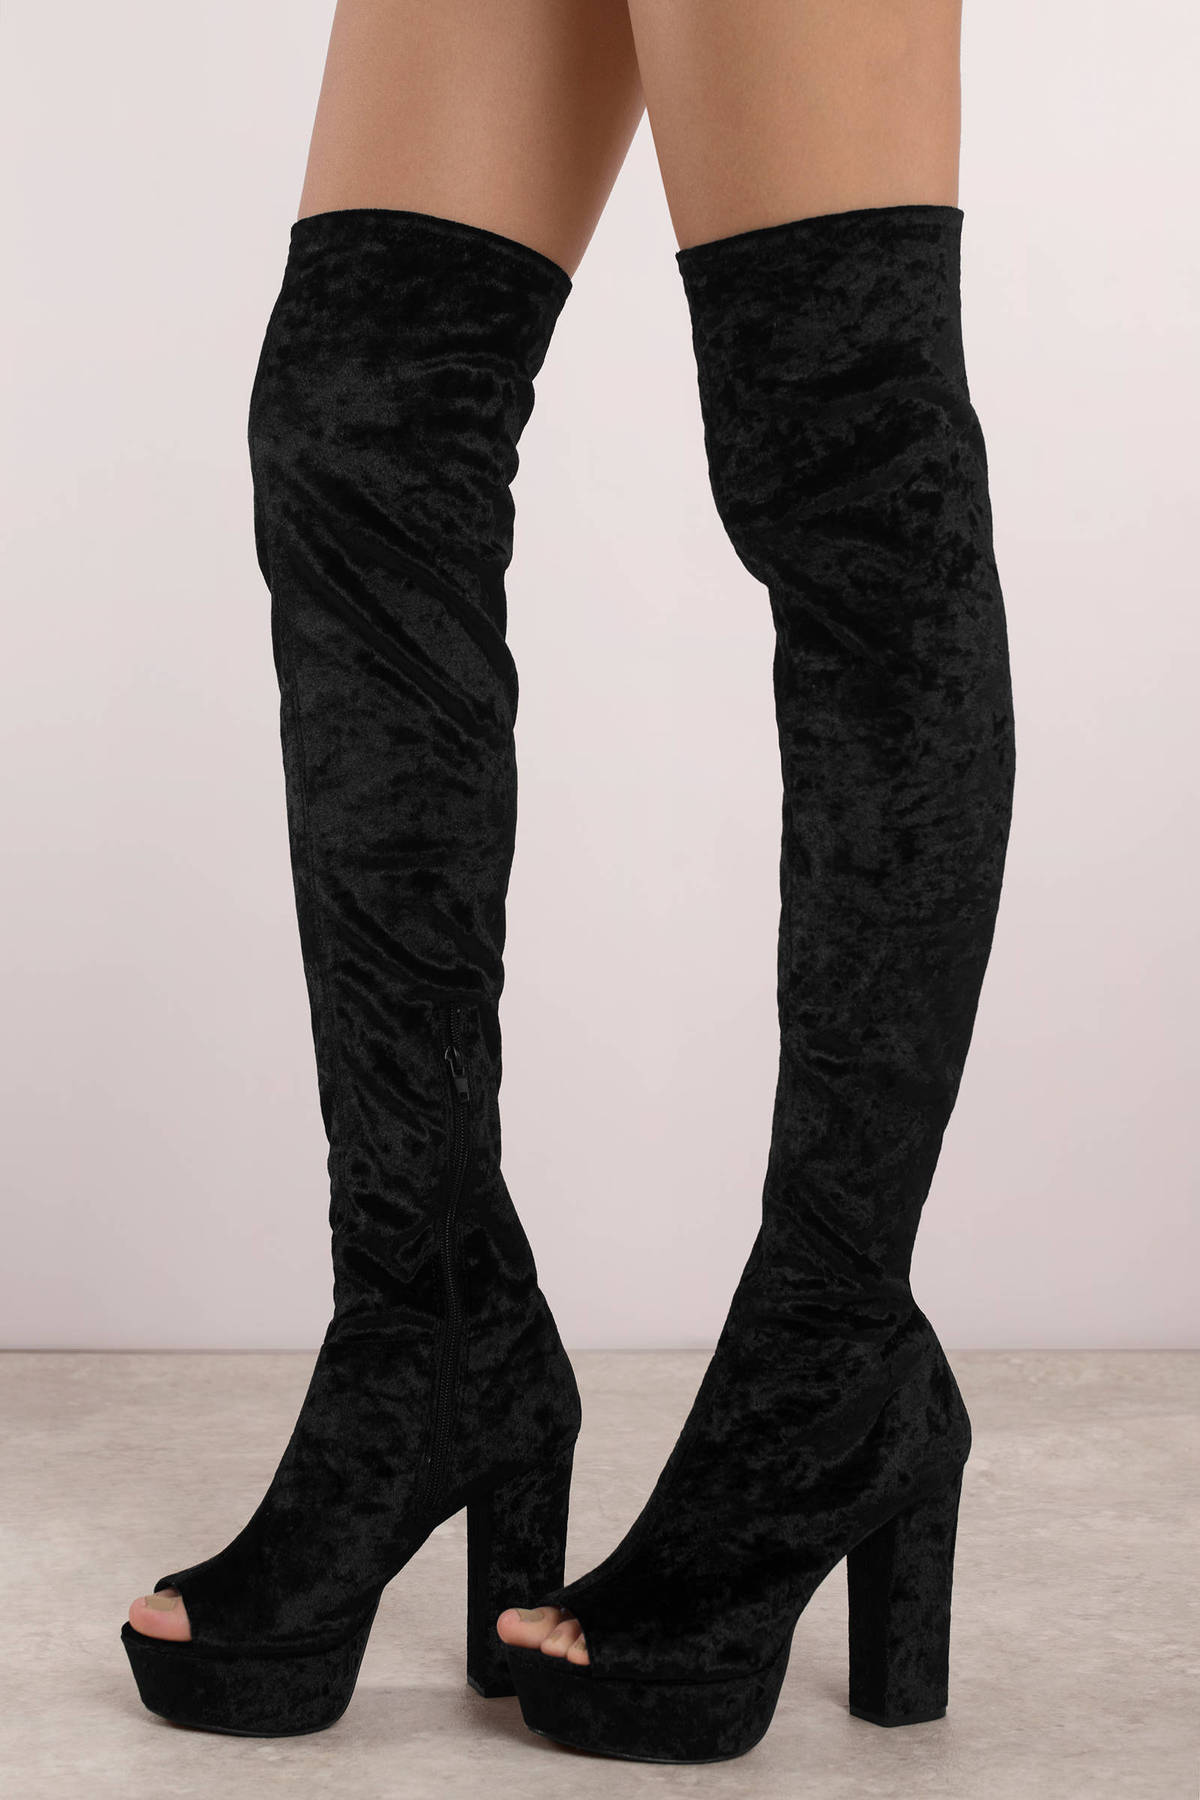 At Dusk Crushed Velvet Thigh High Boots in Black - $24 | Tobi US